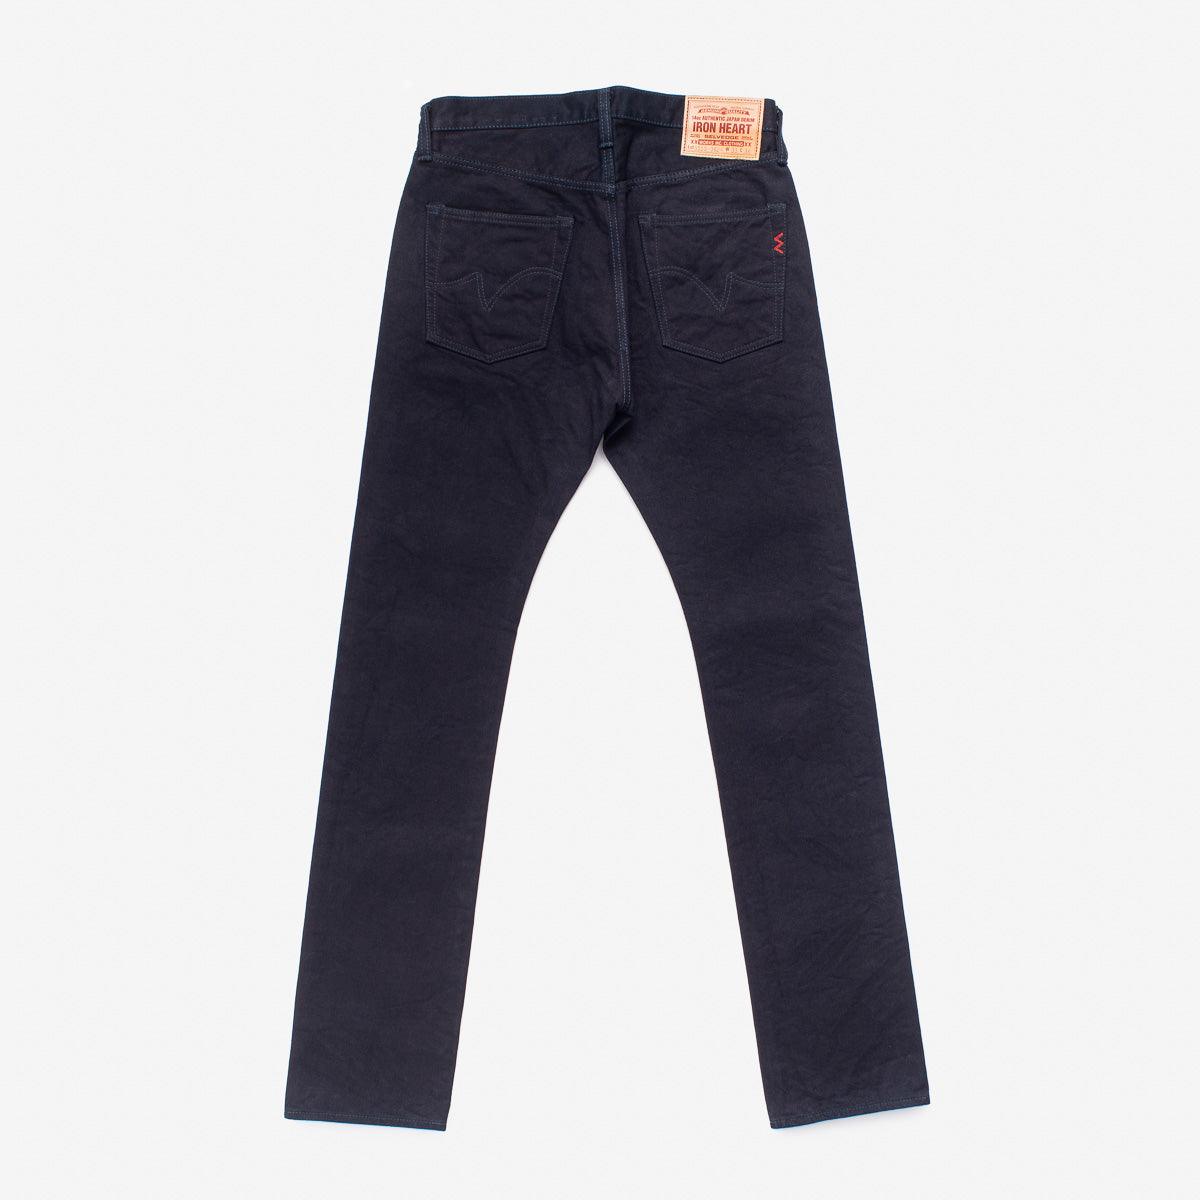 IH-555S-142ib - 14oz Selvedge Denim Super Slim Cut Jeans Indigo/Black